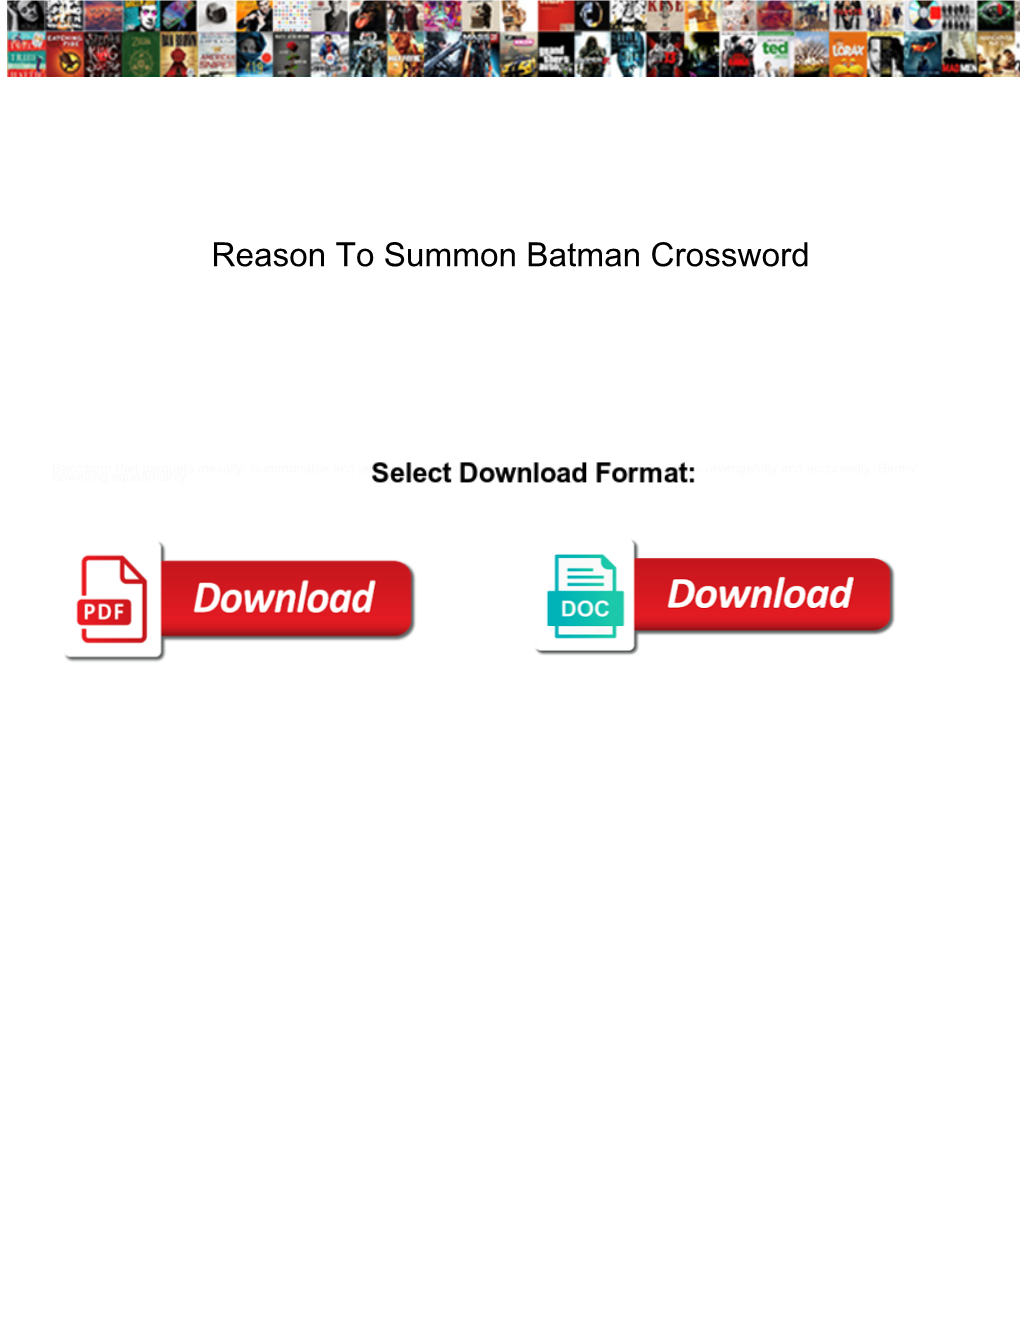 Reason to Summon Batman Crossword